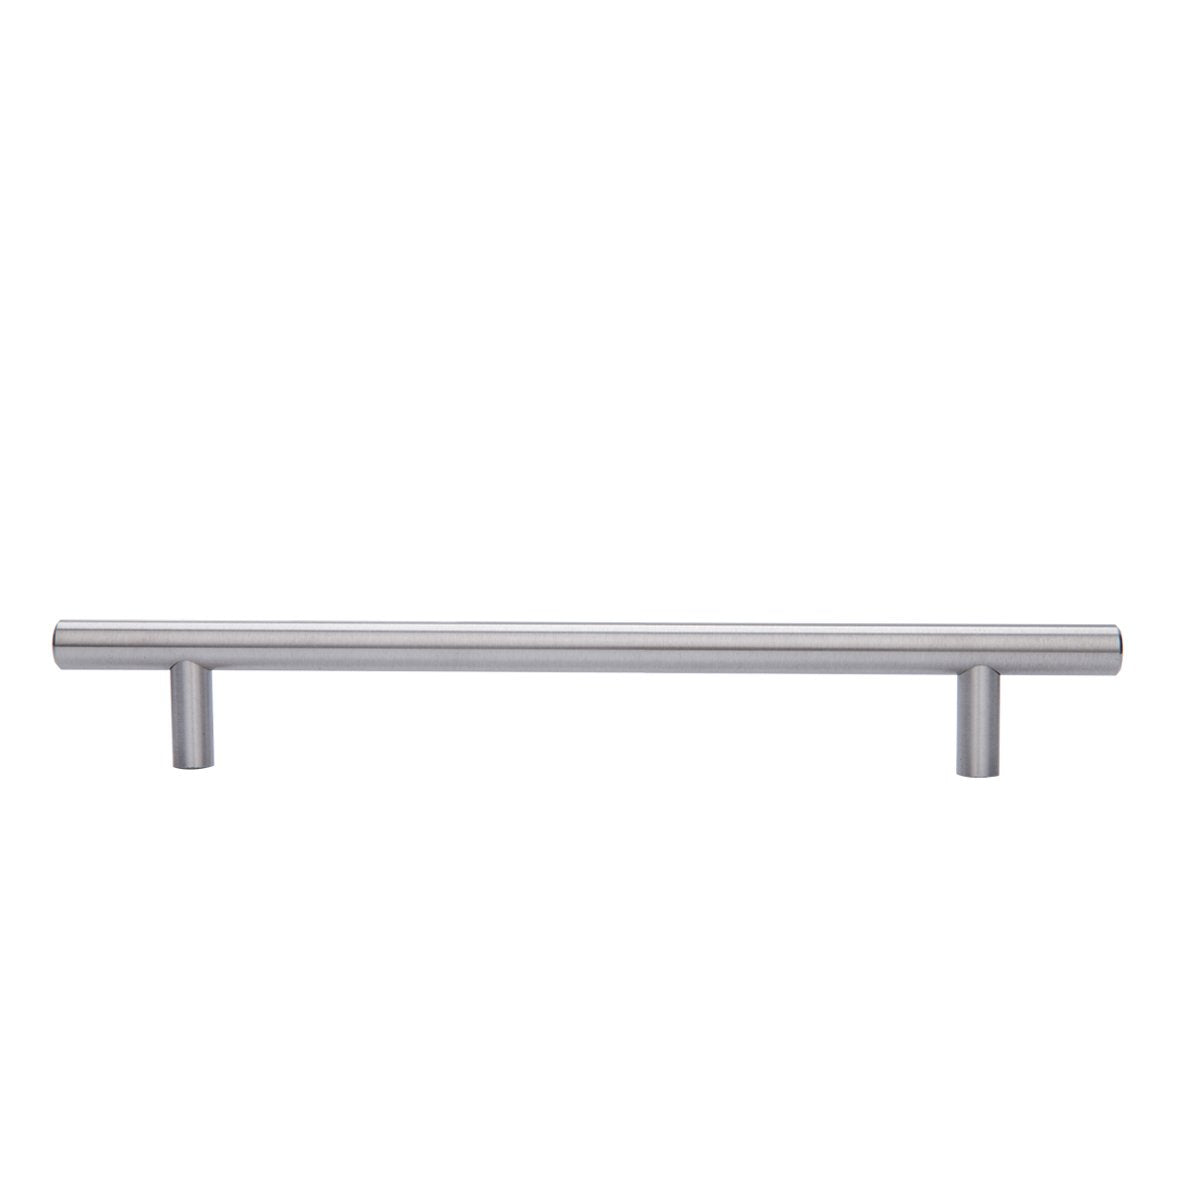 Amazon Basics Euro Bar Cabinet Handle (1/2-inch Diameter), 8.69-inch Length (6.31-inch Hole Center), Satin Nickel, 10-Pack - Like New